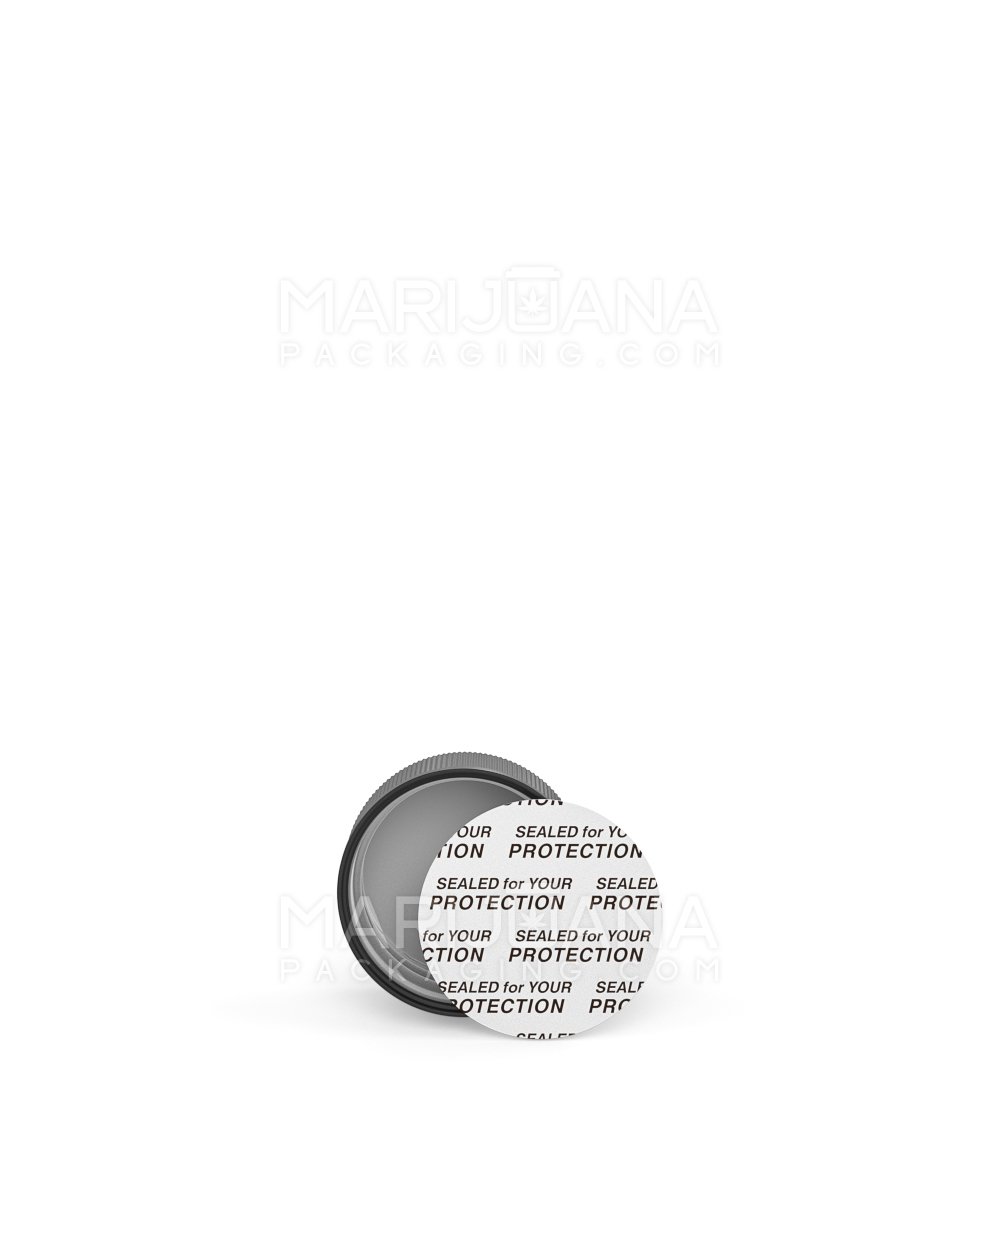 Tamper Evident | Pressure Sensitive Inliners | 28mm - Foam - 250 Count - 1